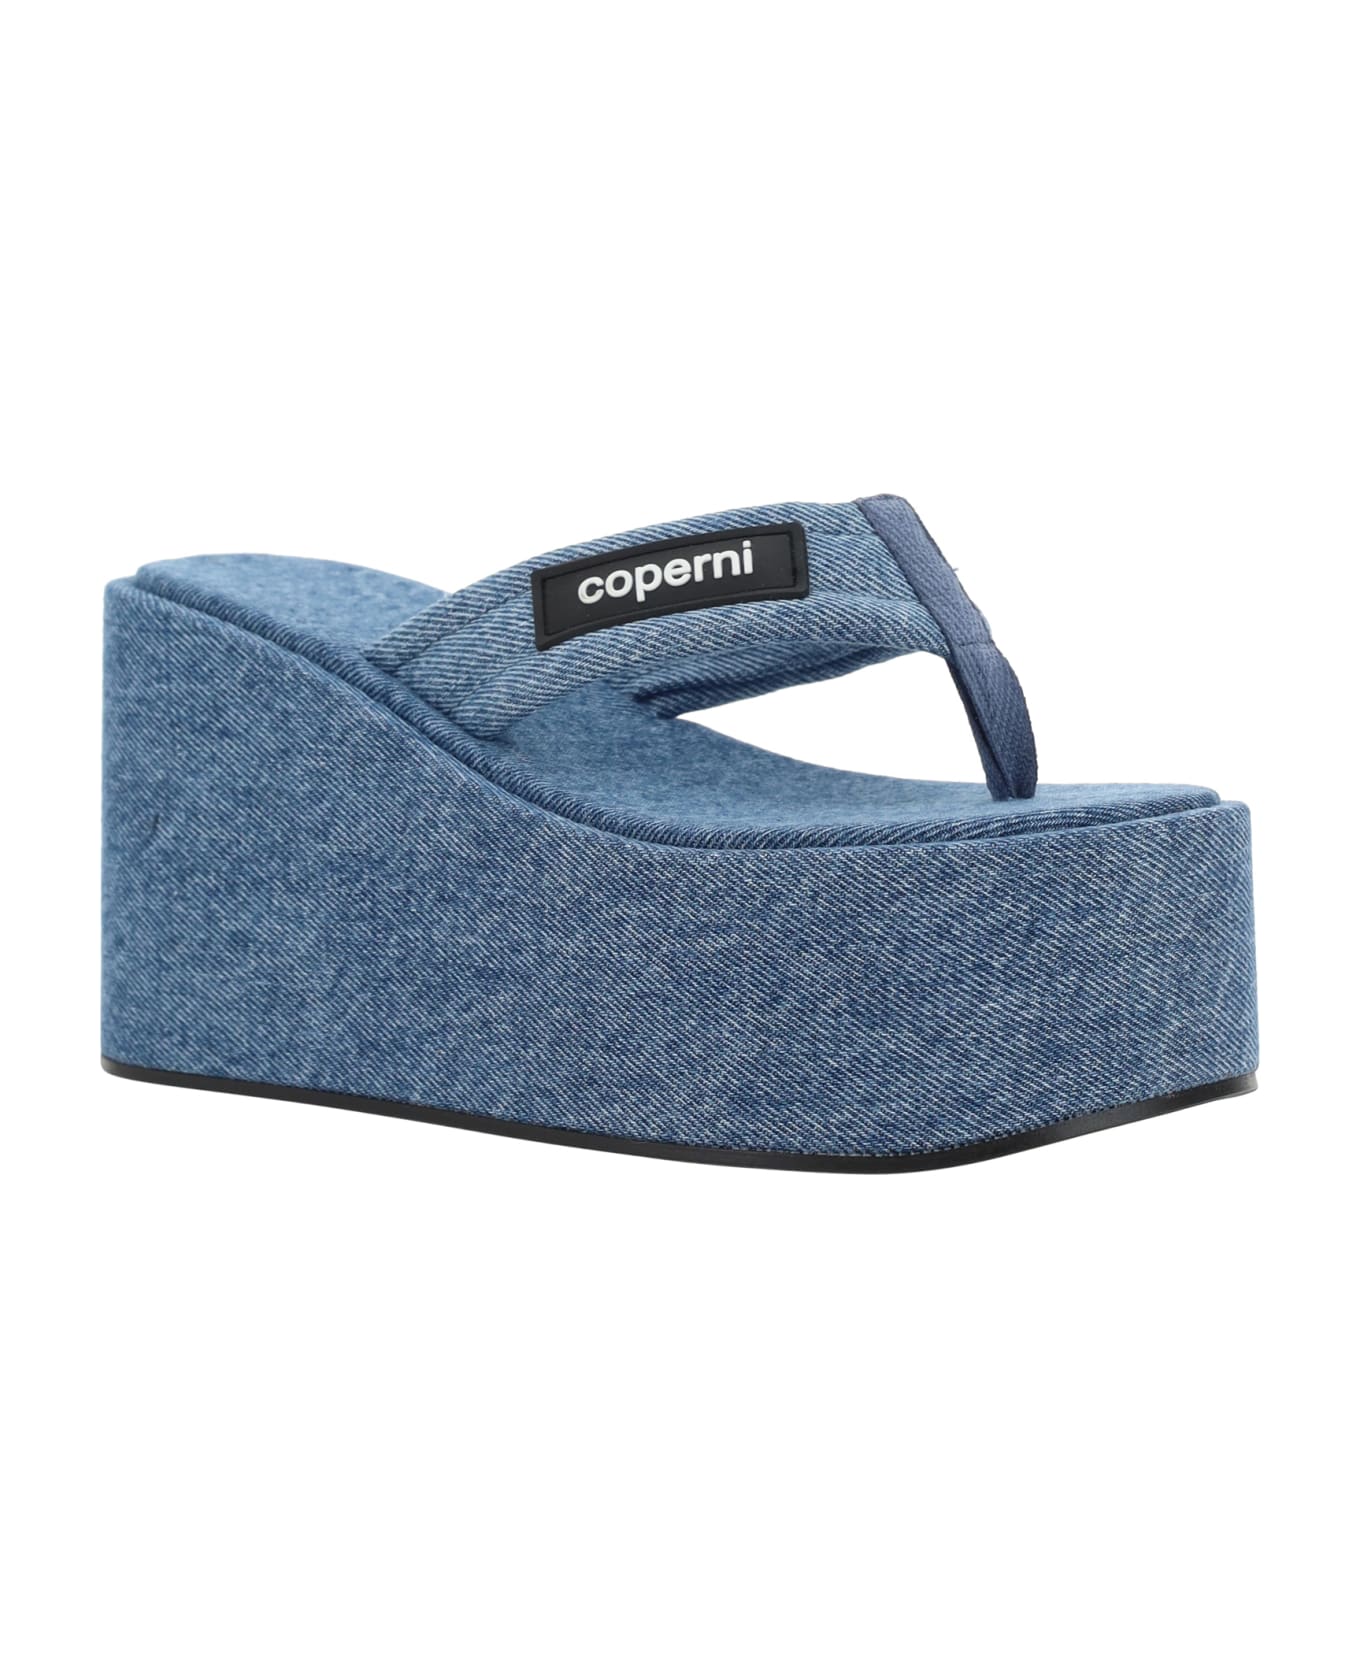 Coperni Wedge Sandals - Washed Blue